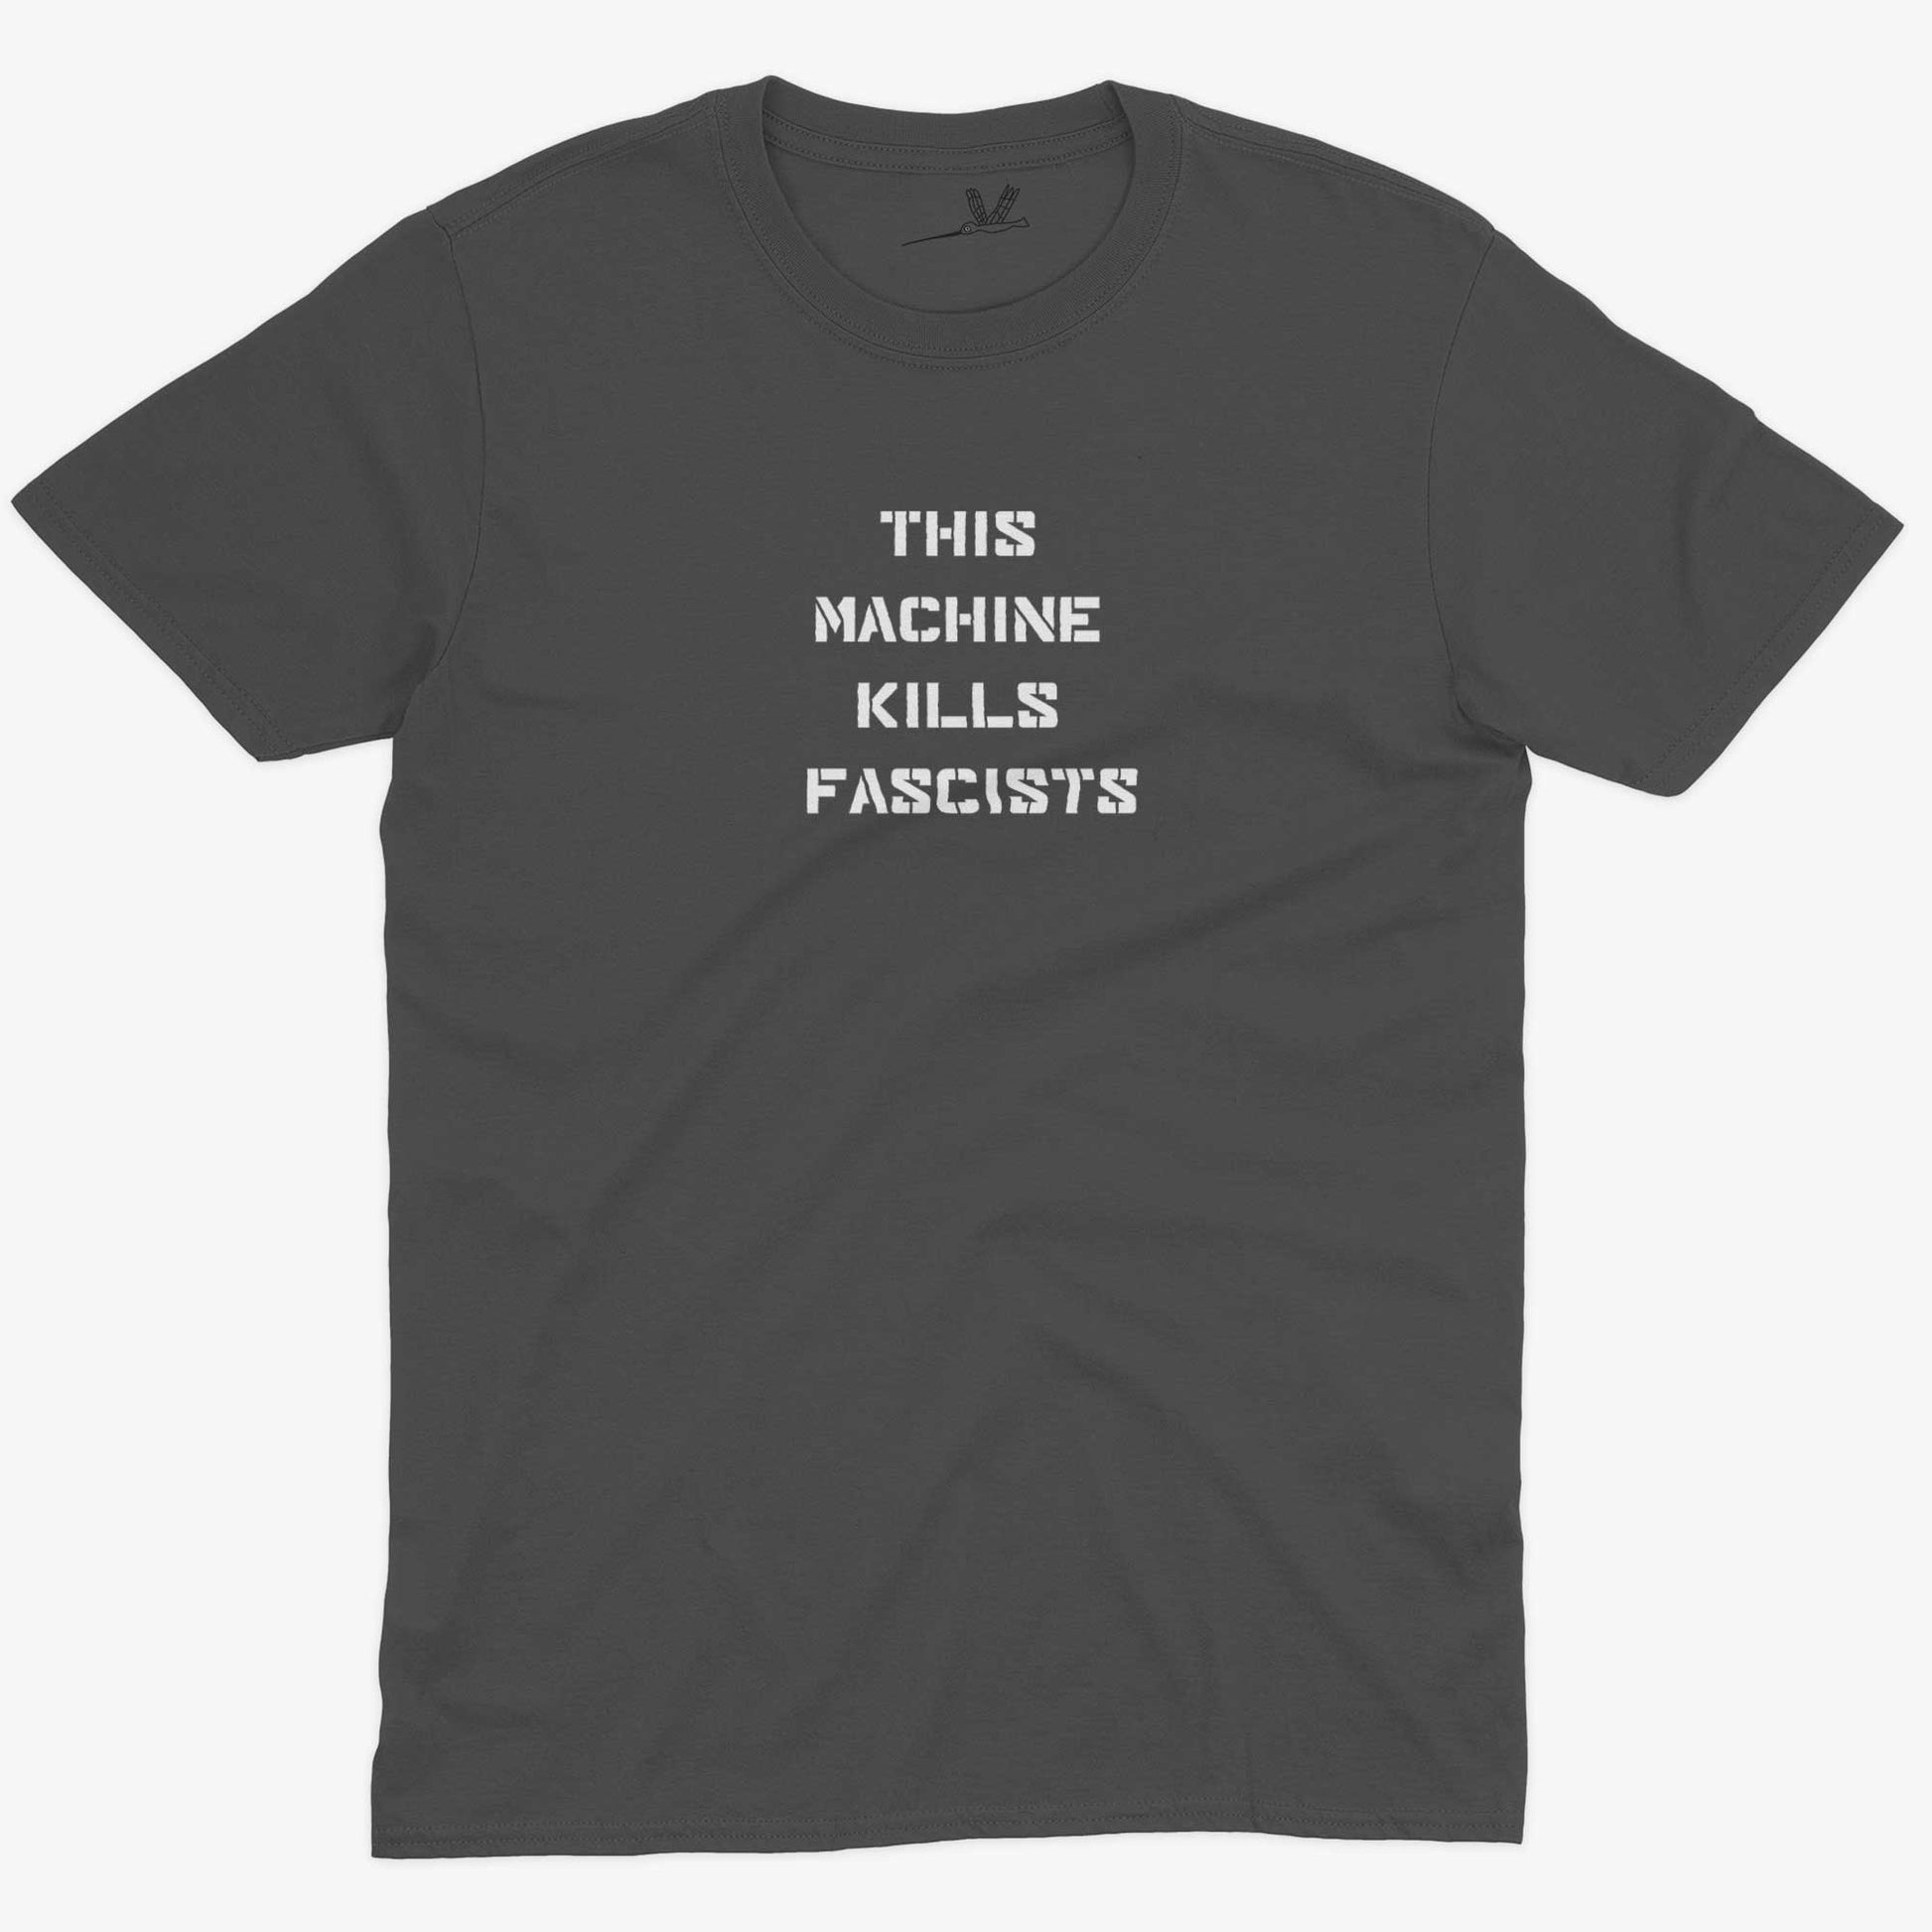 This Machine Kills Fascists Unisex Or Women's Cotton T-shirt-Asphalt-Unisex